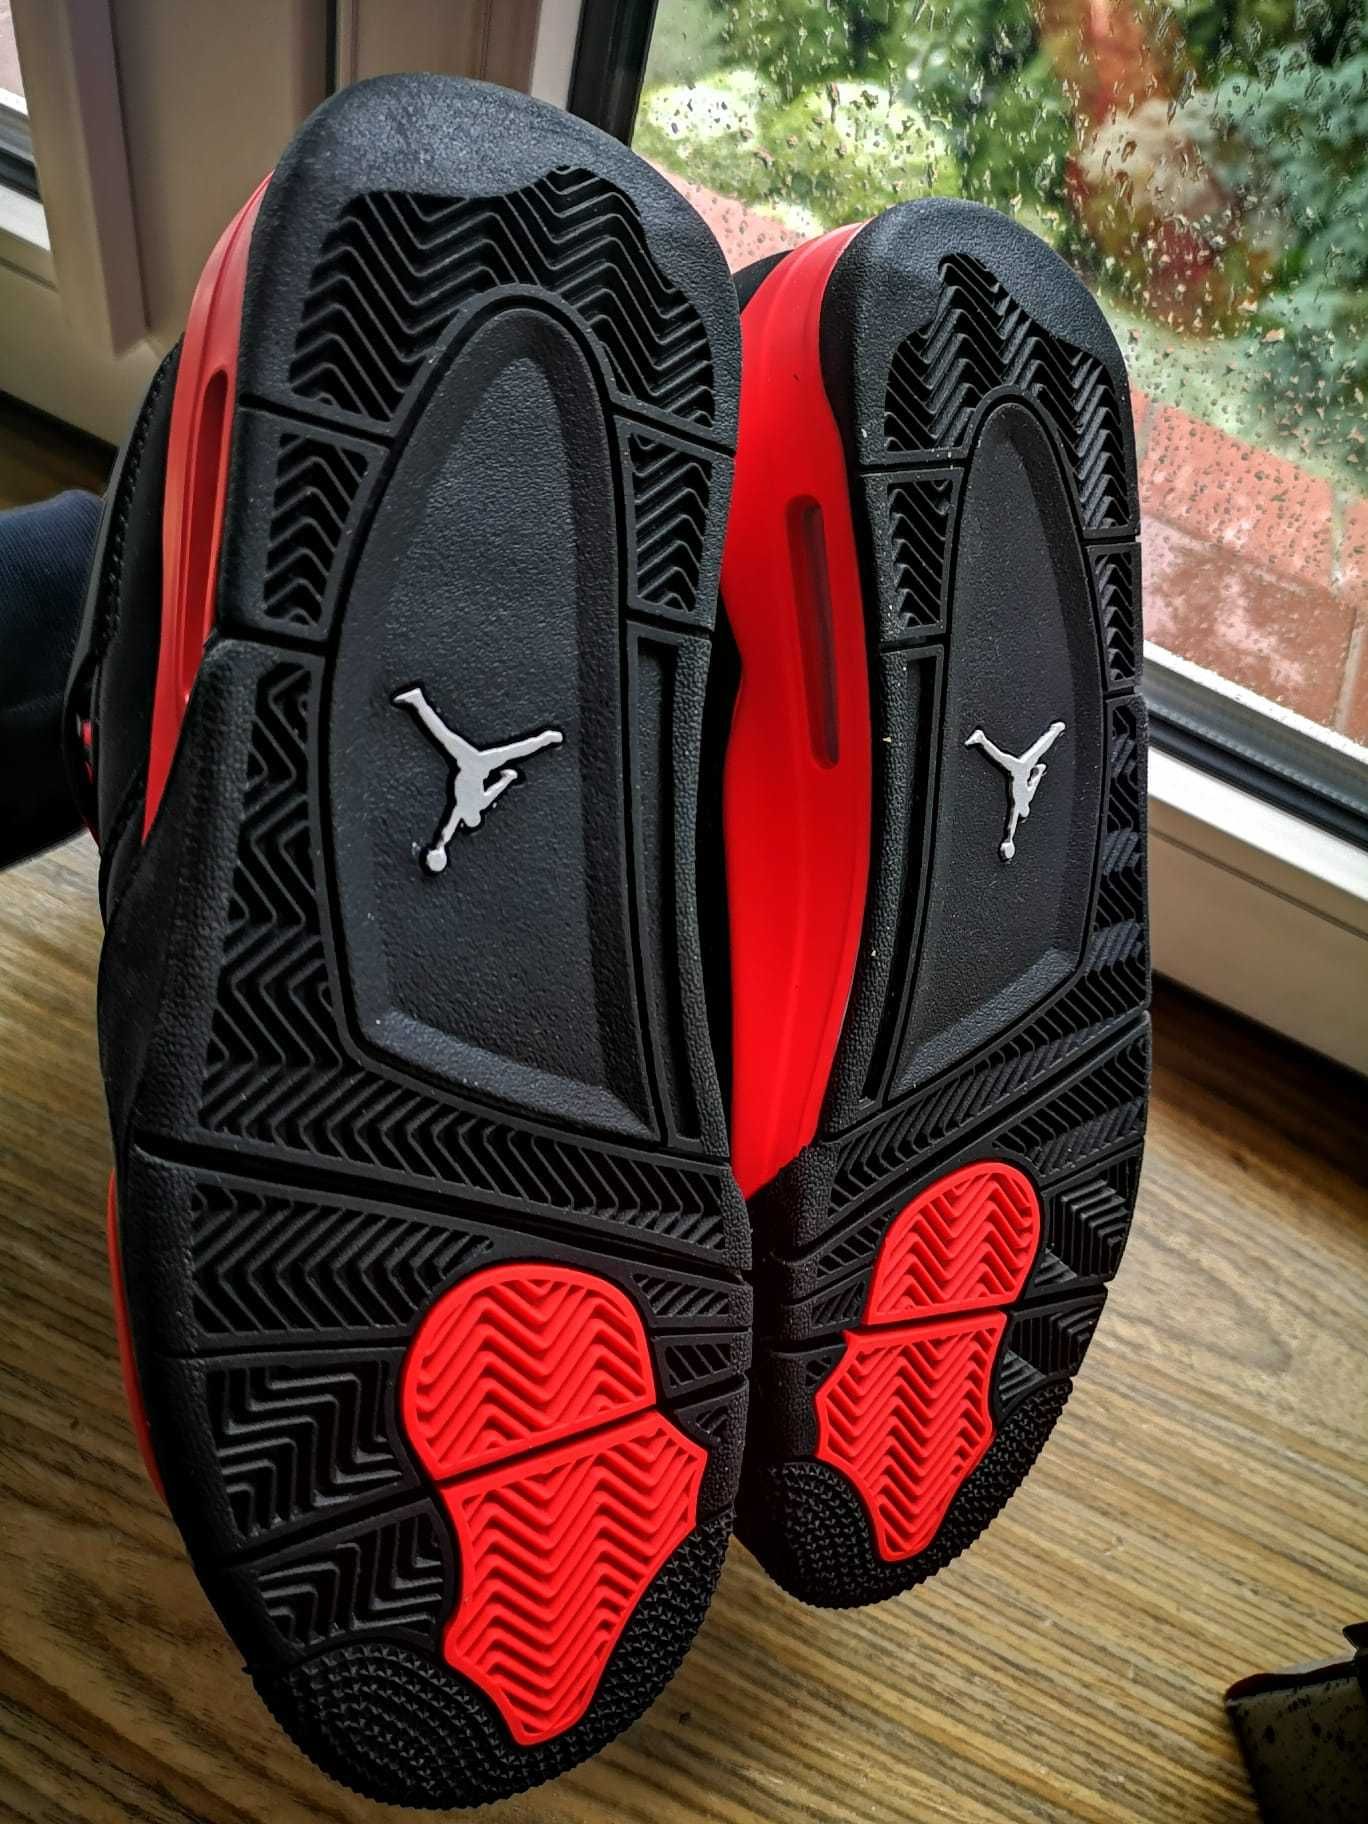 Nike Air Jordan 4 | Red Thunder | rozmiar EU44 | Nowość!